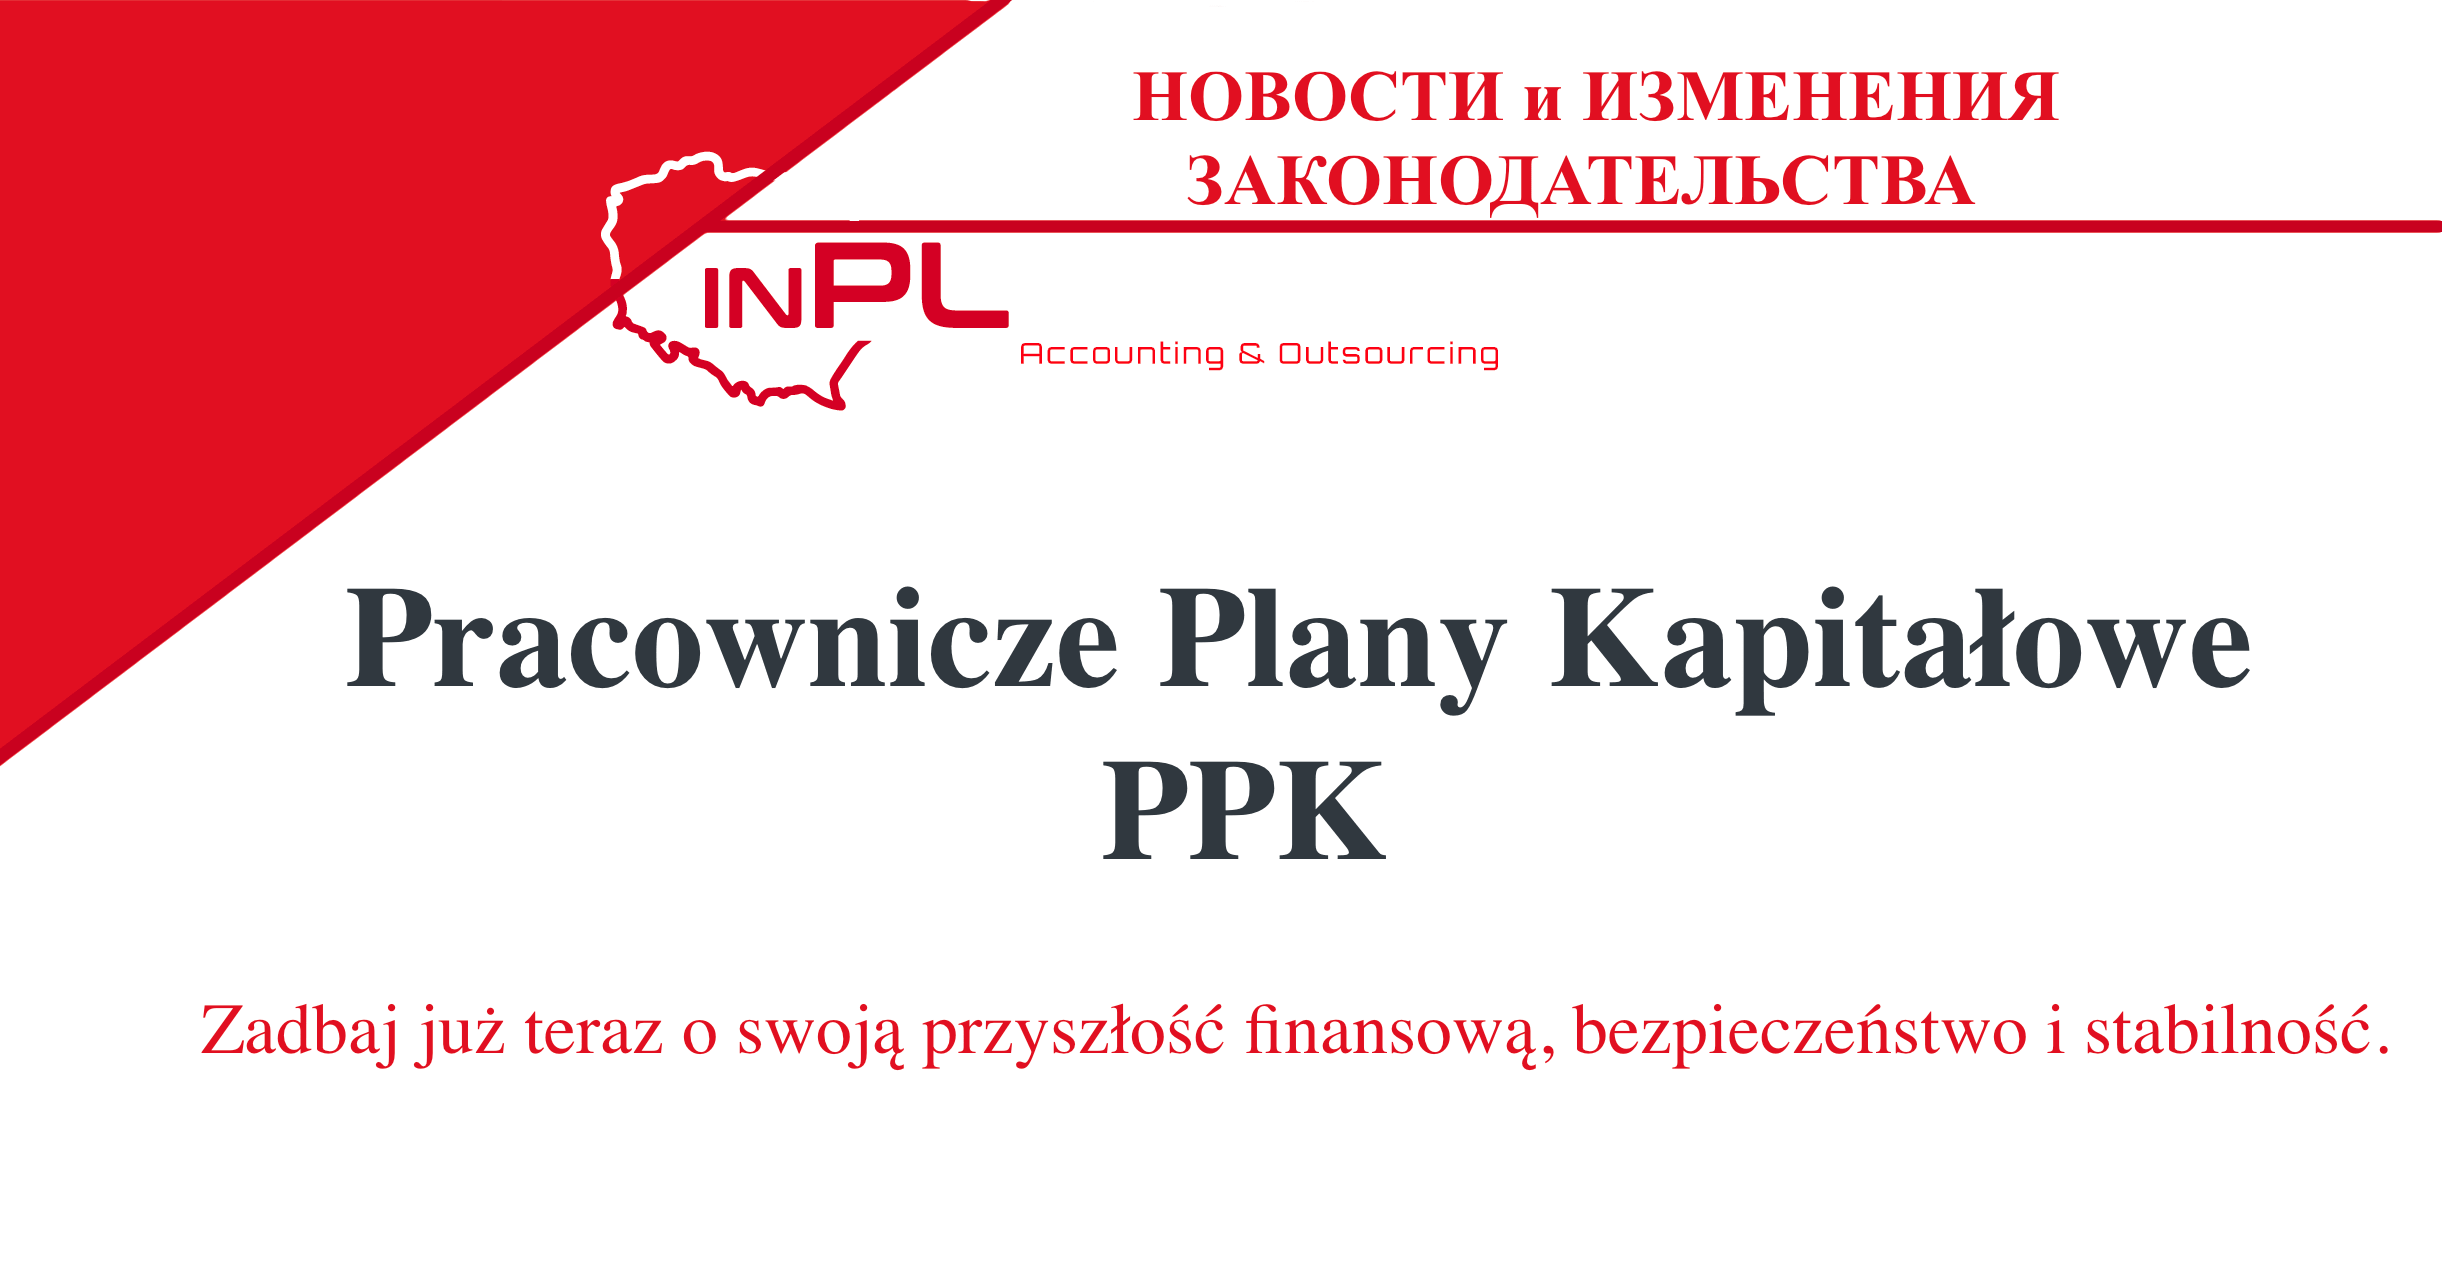 PPK - Pracownicze Plany Kapitałowe